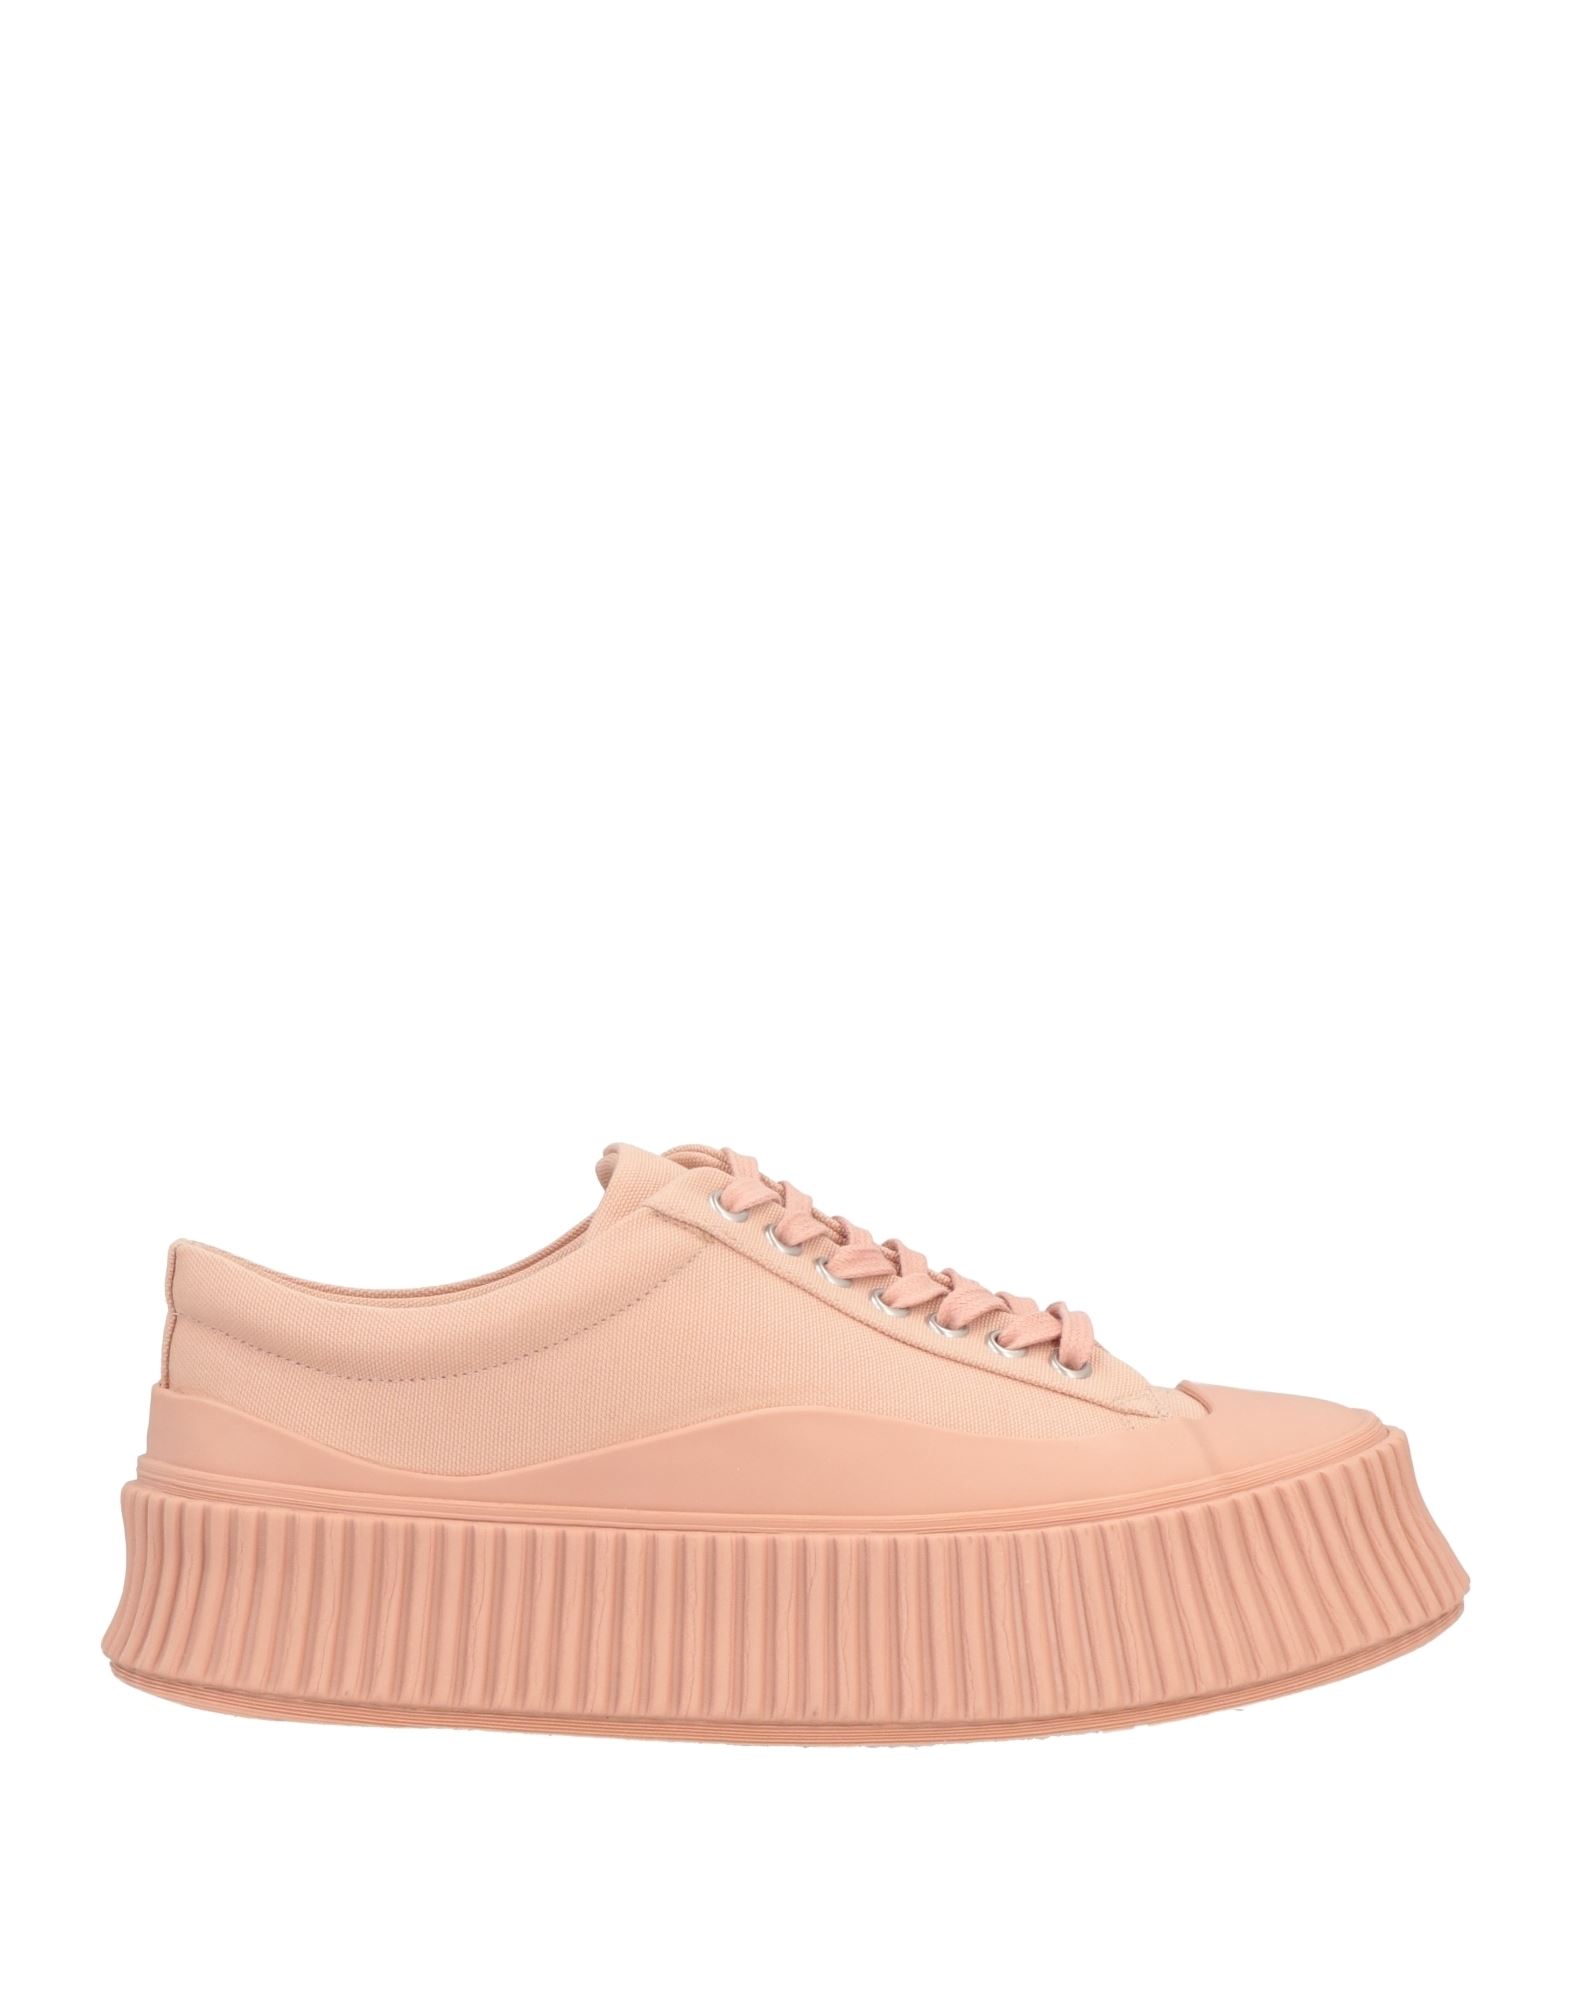 Jil Sander Woman Sneakers Blush Size 8 Textile Fibers, Rubber In Pink